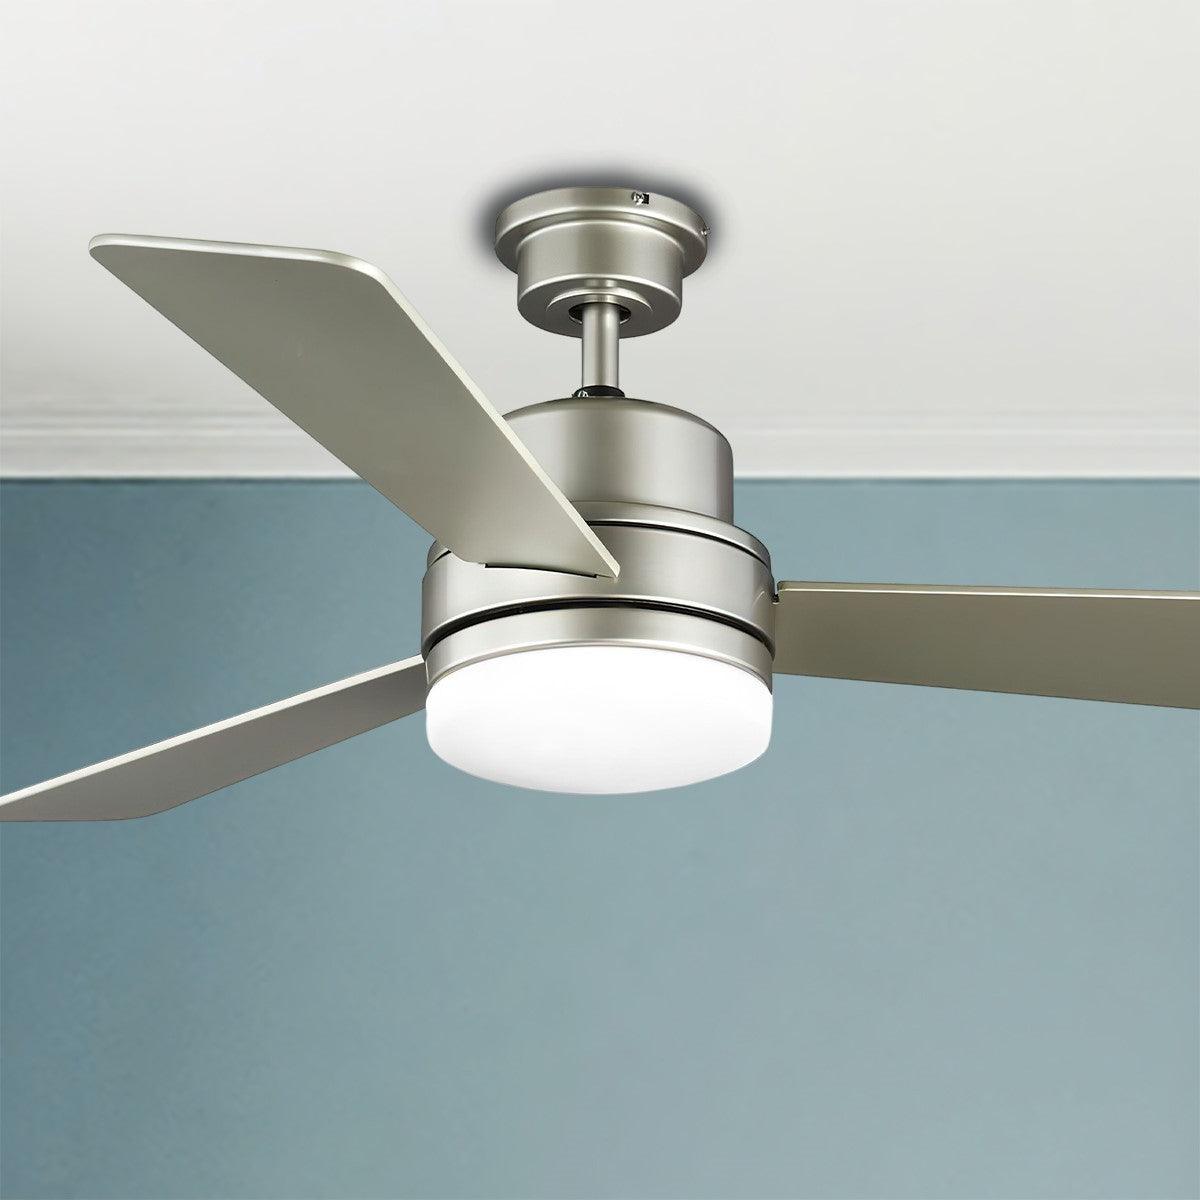 Trevina II 52 Inch Modern Ceiling Fan With Light